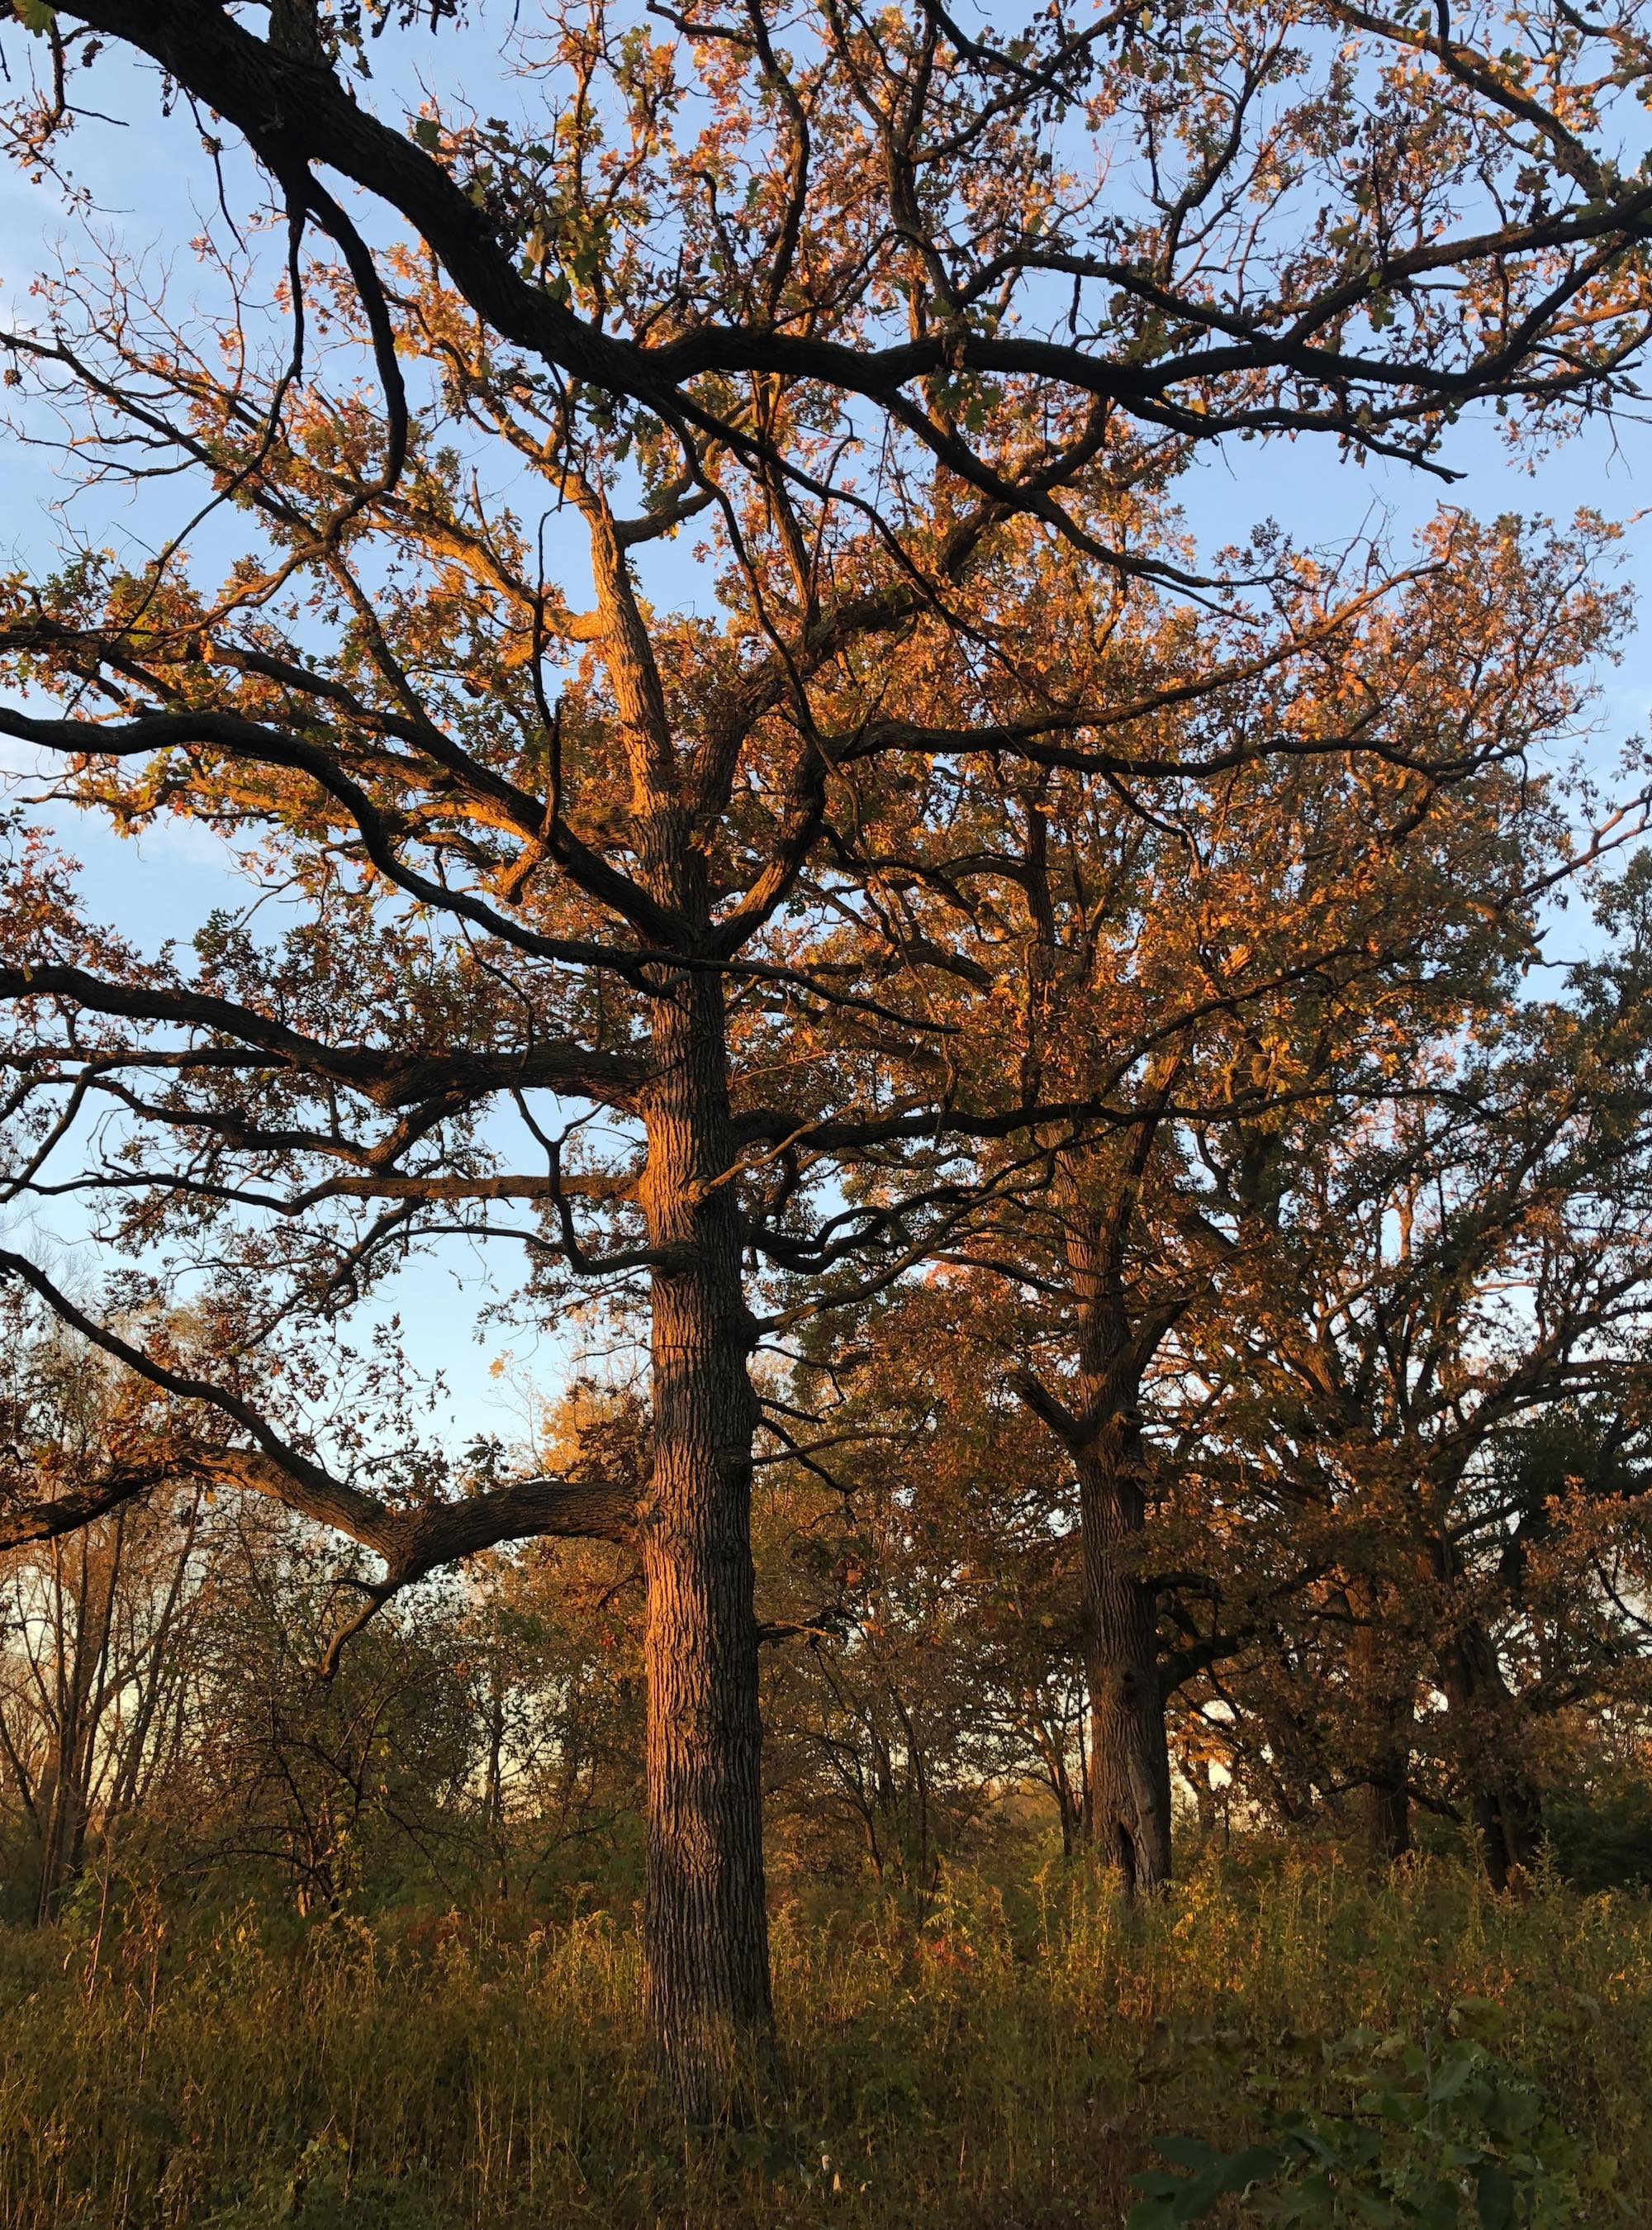 Oak Savanna on October 16, 2018 in University of Wisconsin Arboretum in Madison, Wisconsin on the north shore of Lake Wingra.